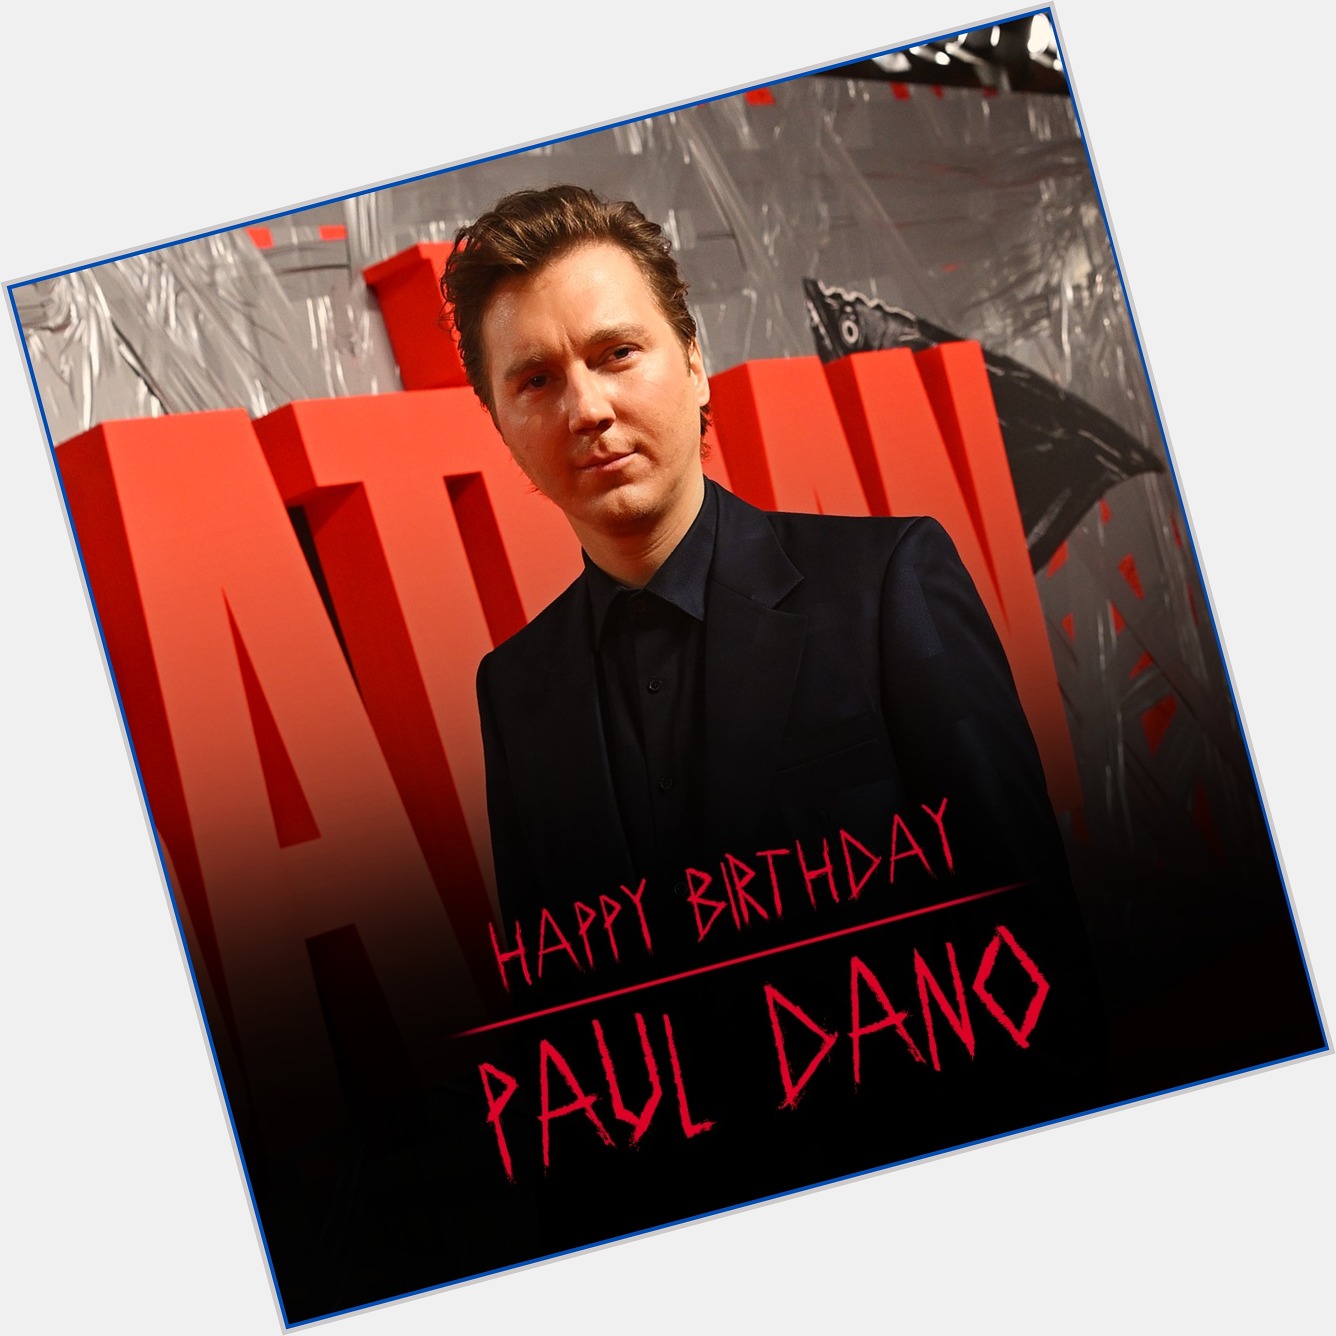 Happy birthday to you  Paul Dano 